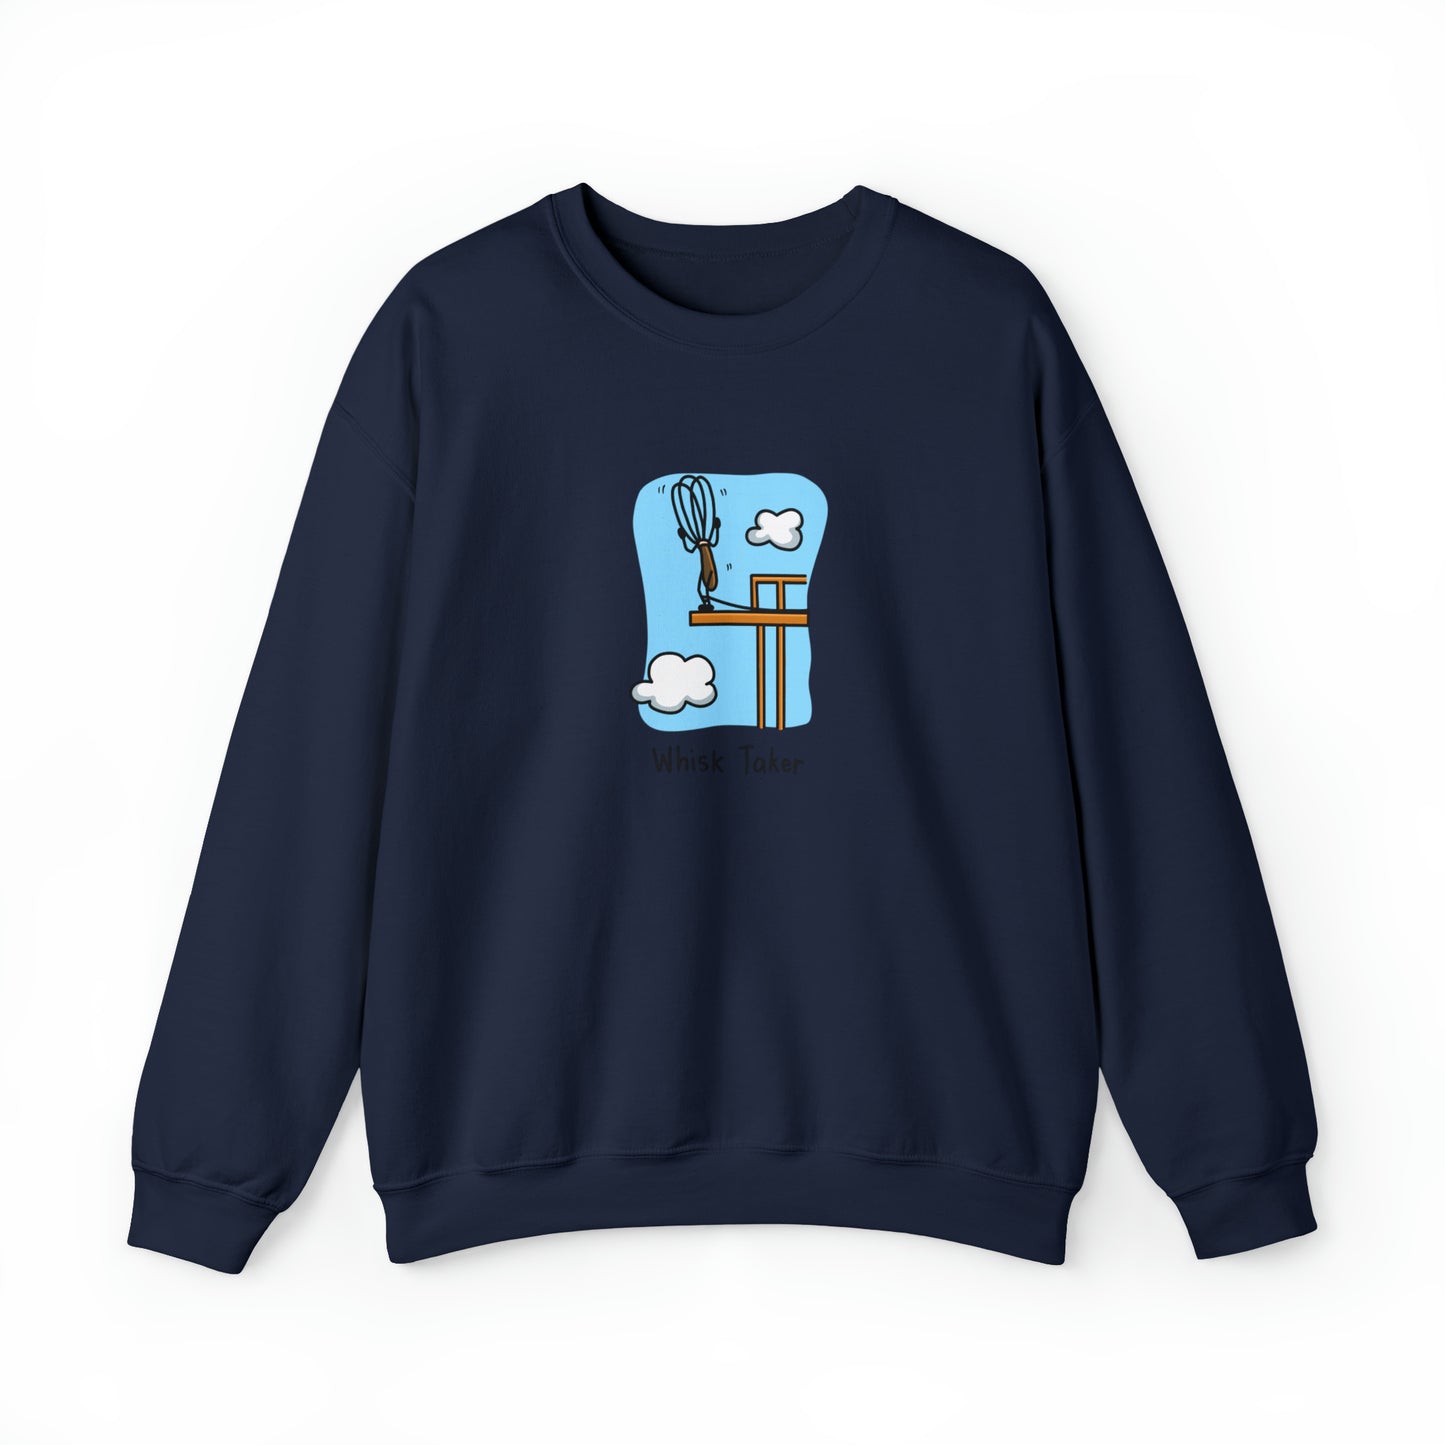 Custom Parody Crewneck Sweatshirt, Whisk Taker Design